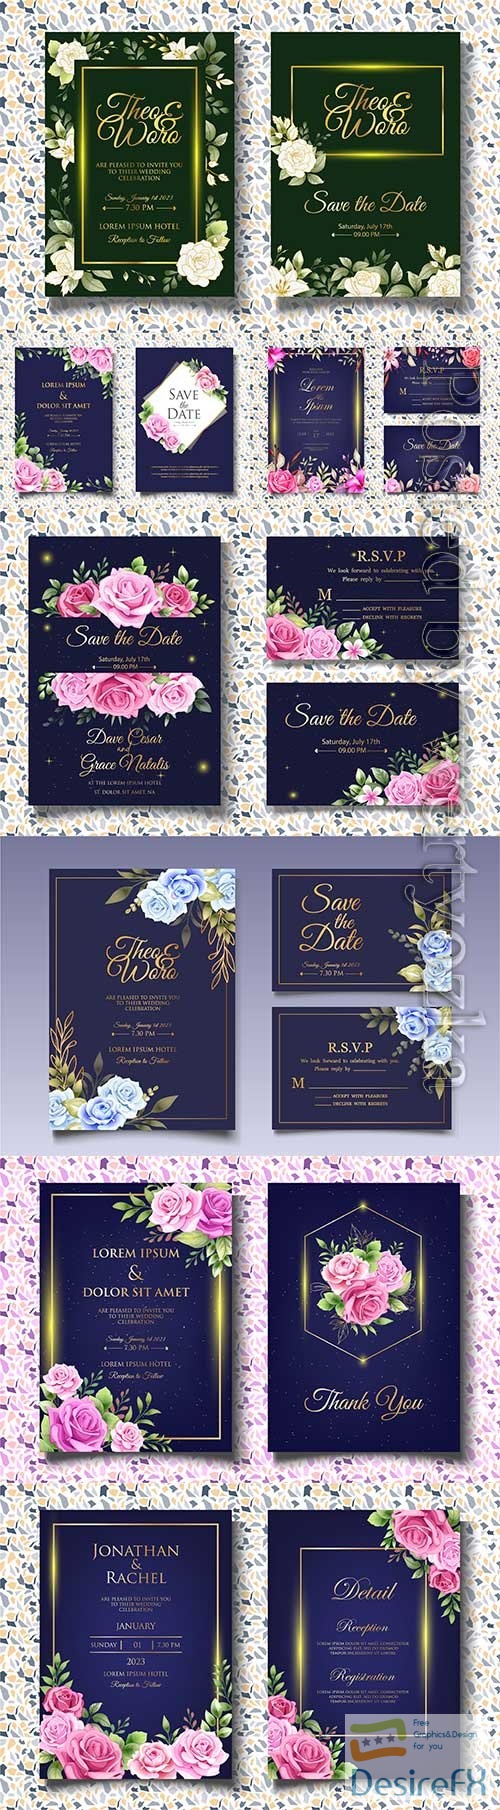 Beautiful invitation wedding with roses